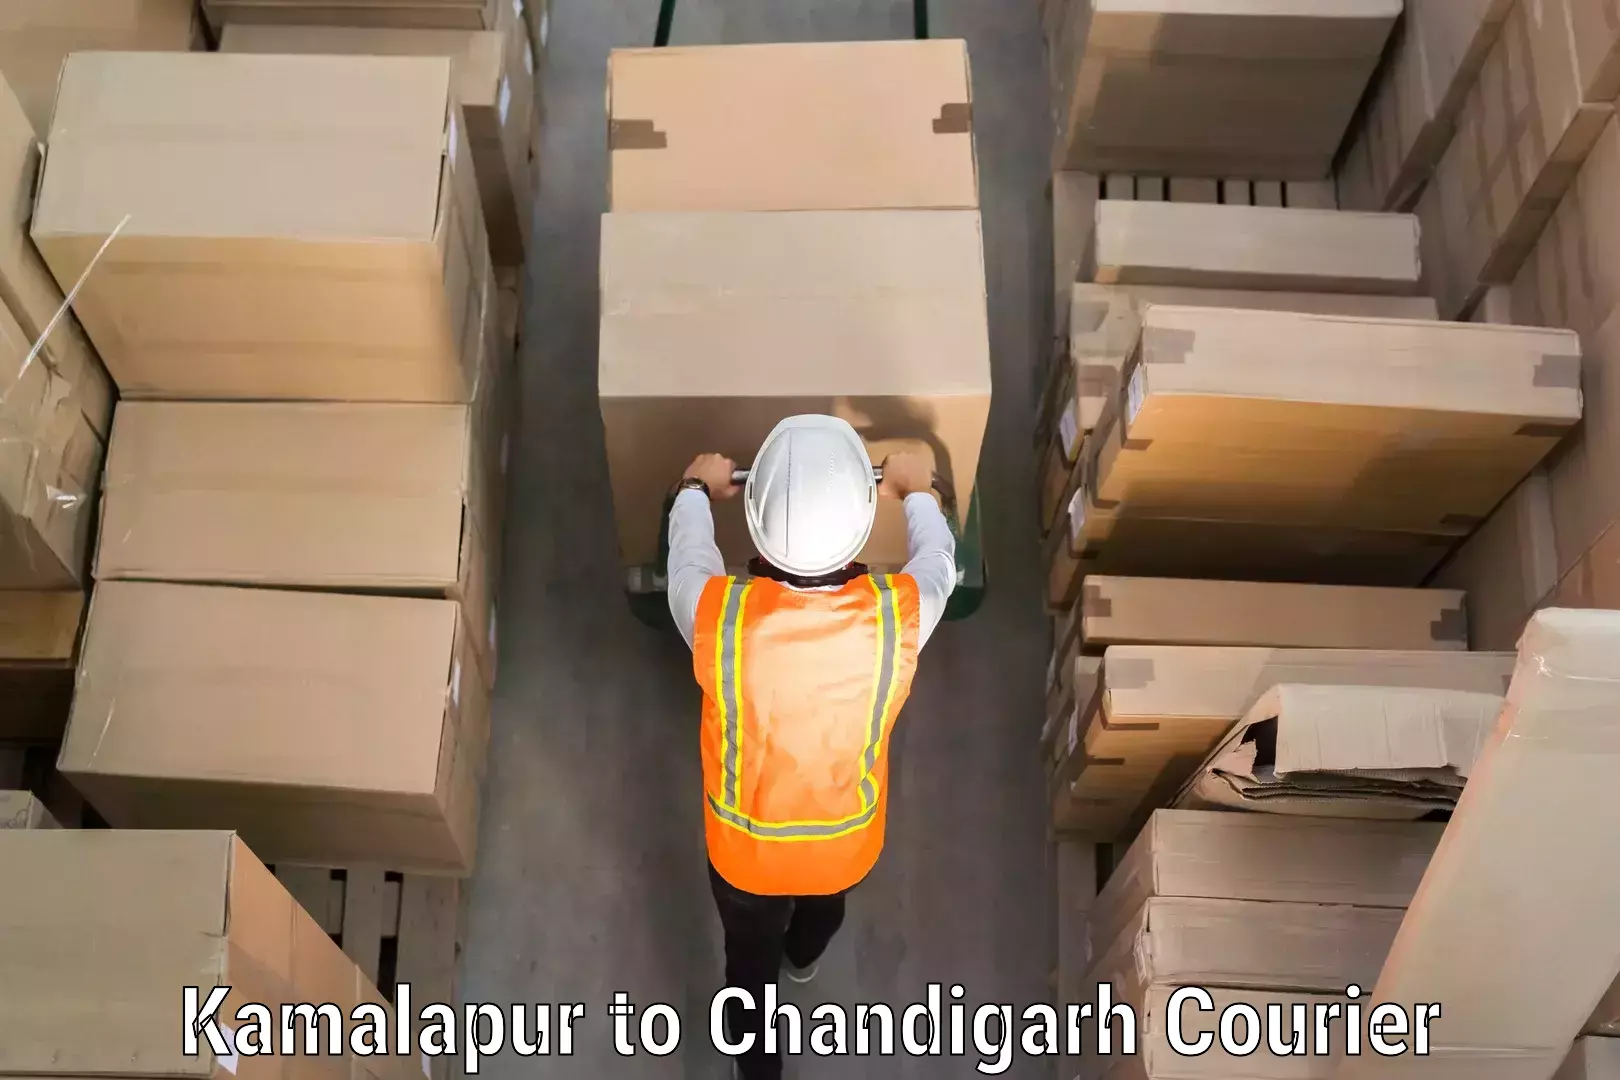 Luggage transport consultancy Kamalapur to Chandigarh